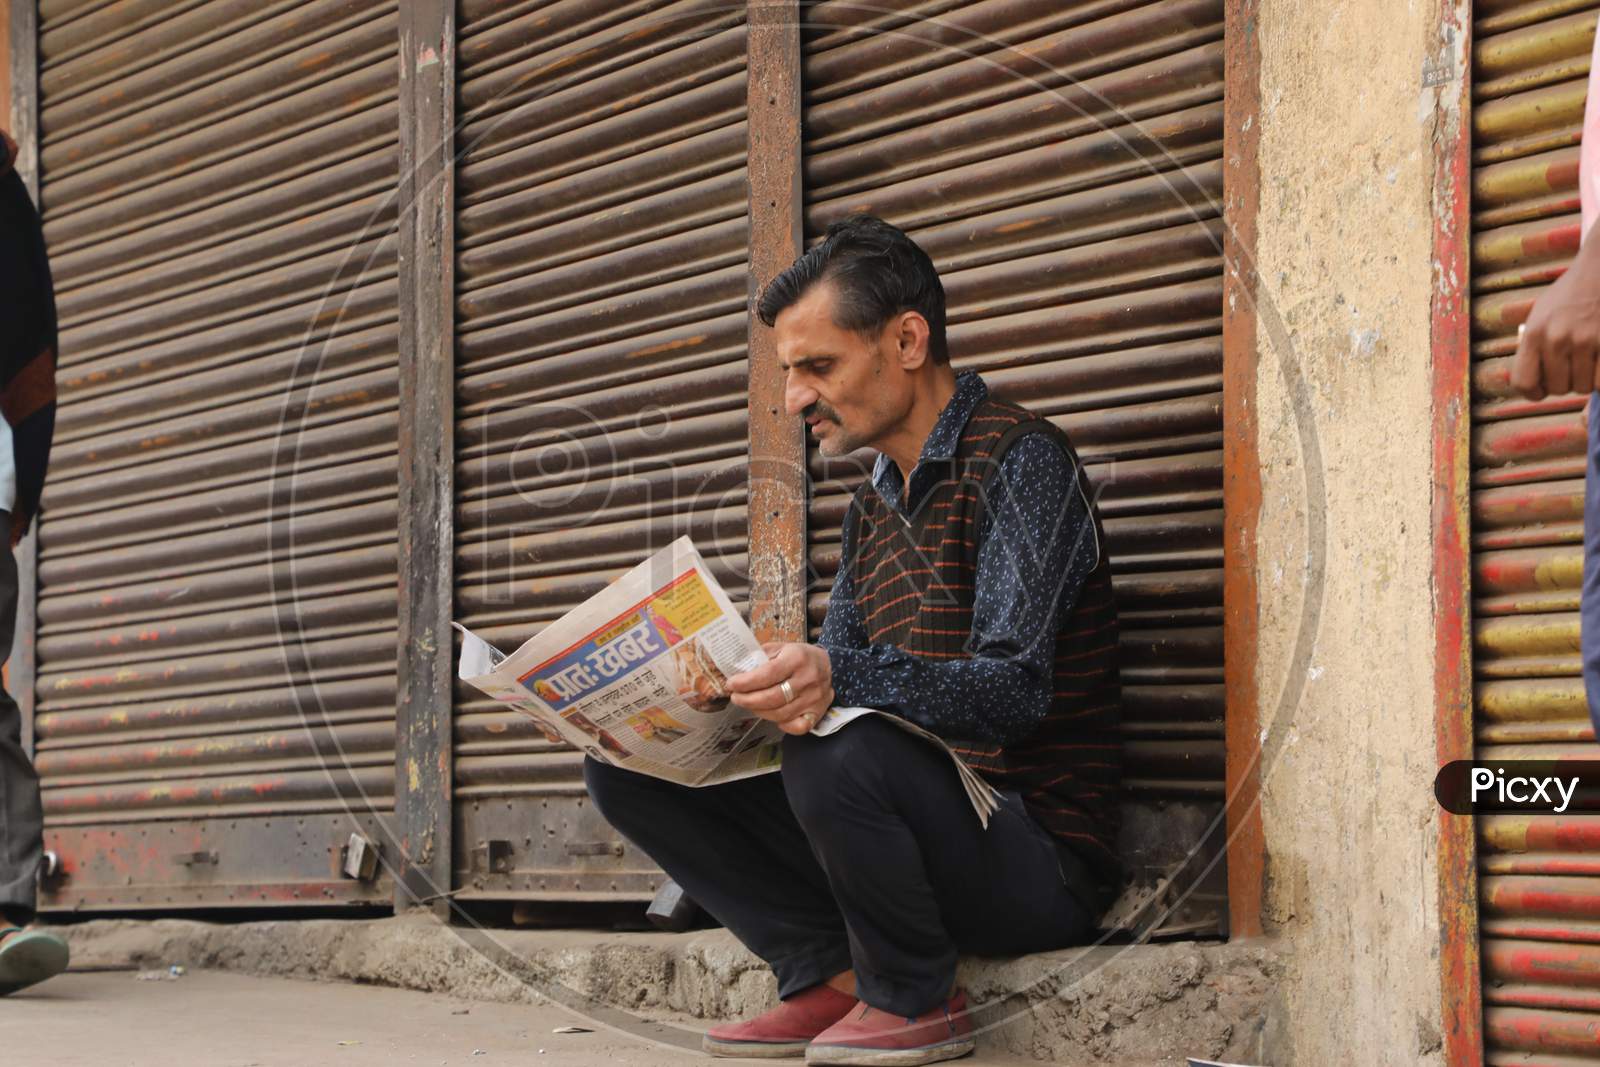 Newspaper reading